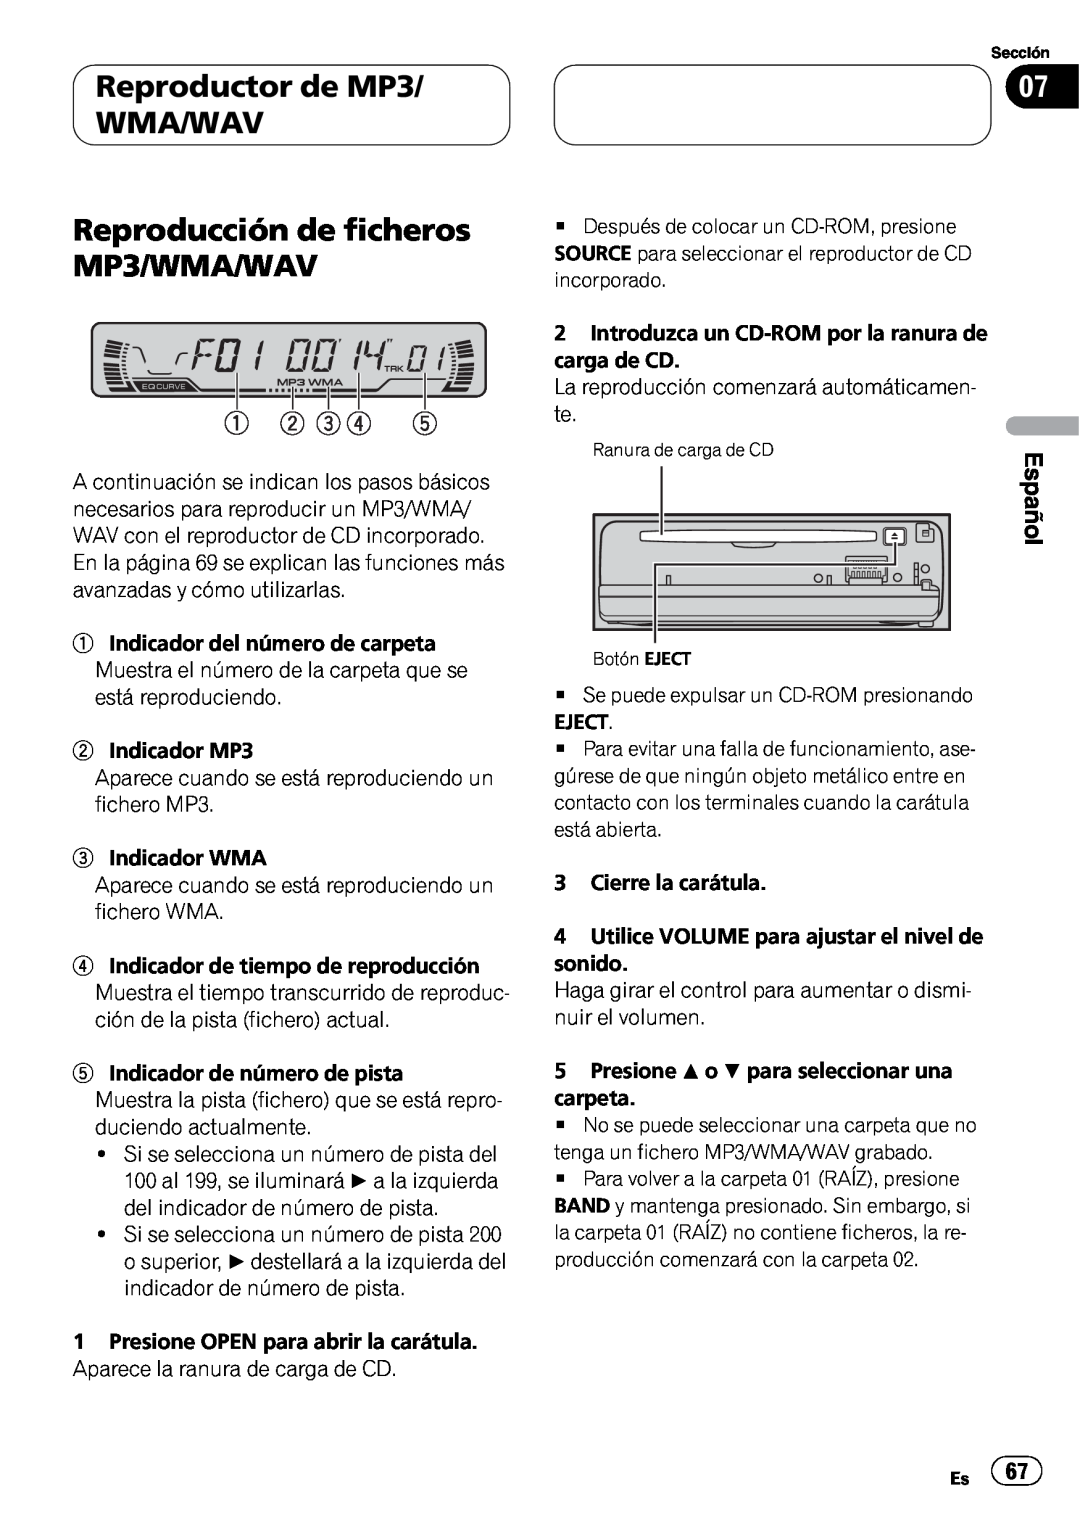 Pioneer DEH-P3630MP, DEH-P3600MPB operation manual 